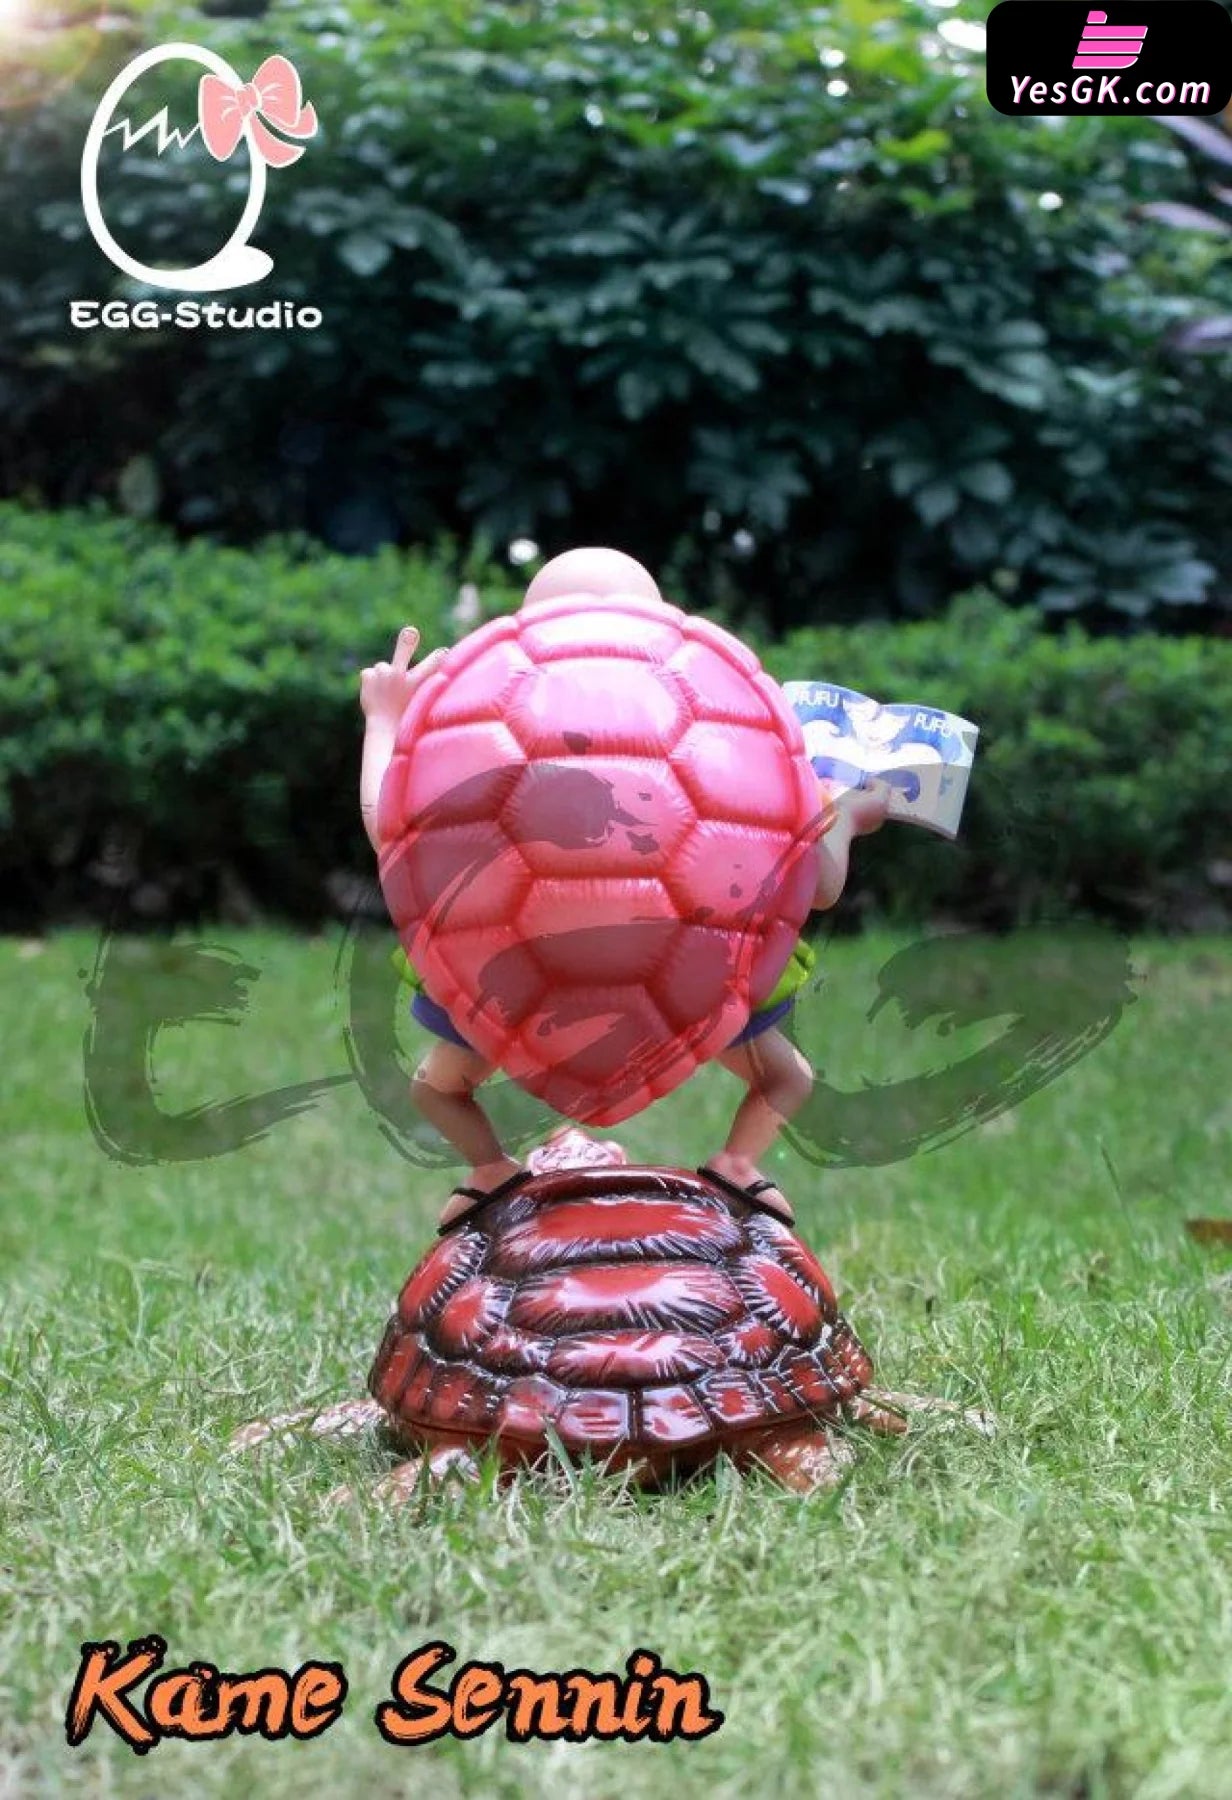 Dragon Ball Master Roshi Statue - Egg Studio [In Stock] Dragonball